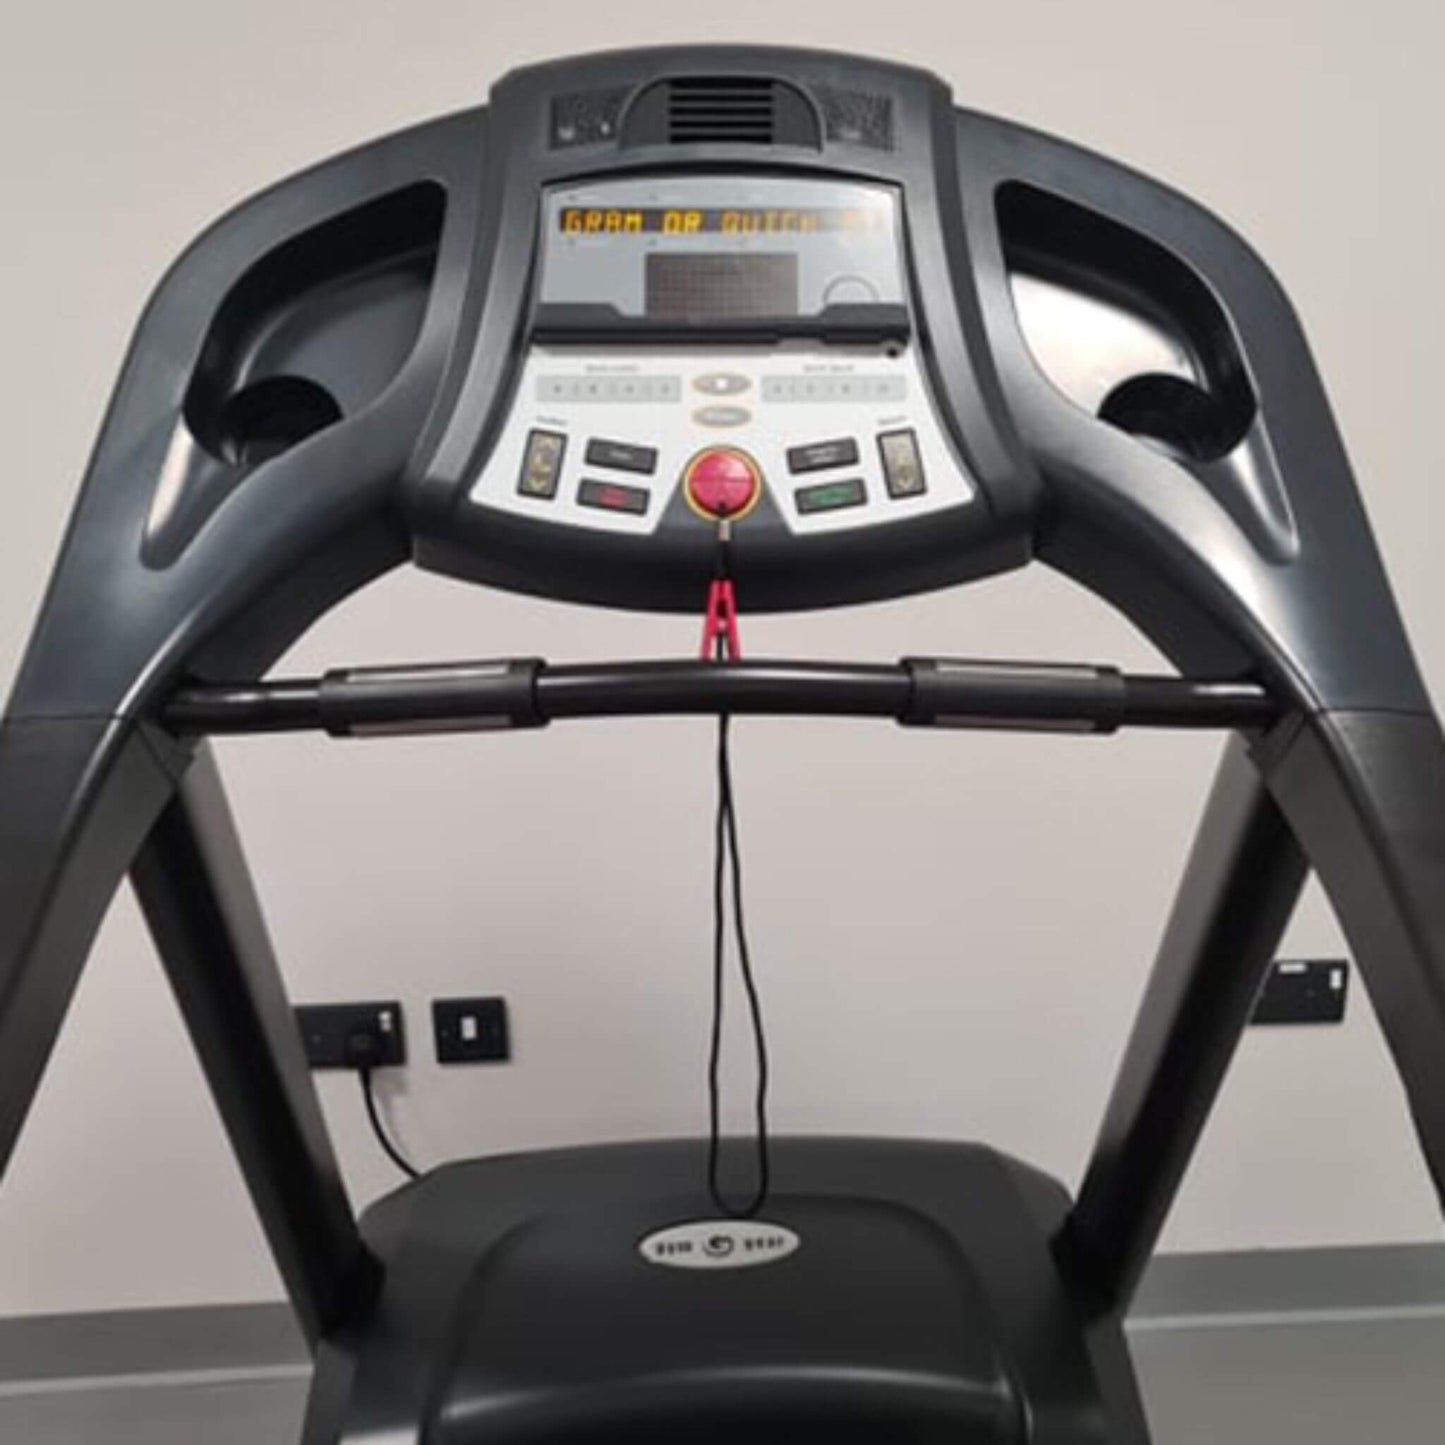 T95 Rehabilitation treadmill  screen data